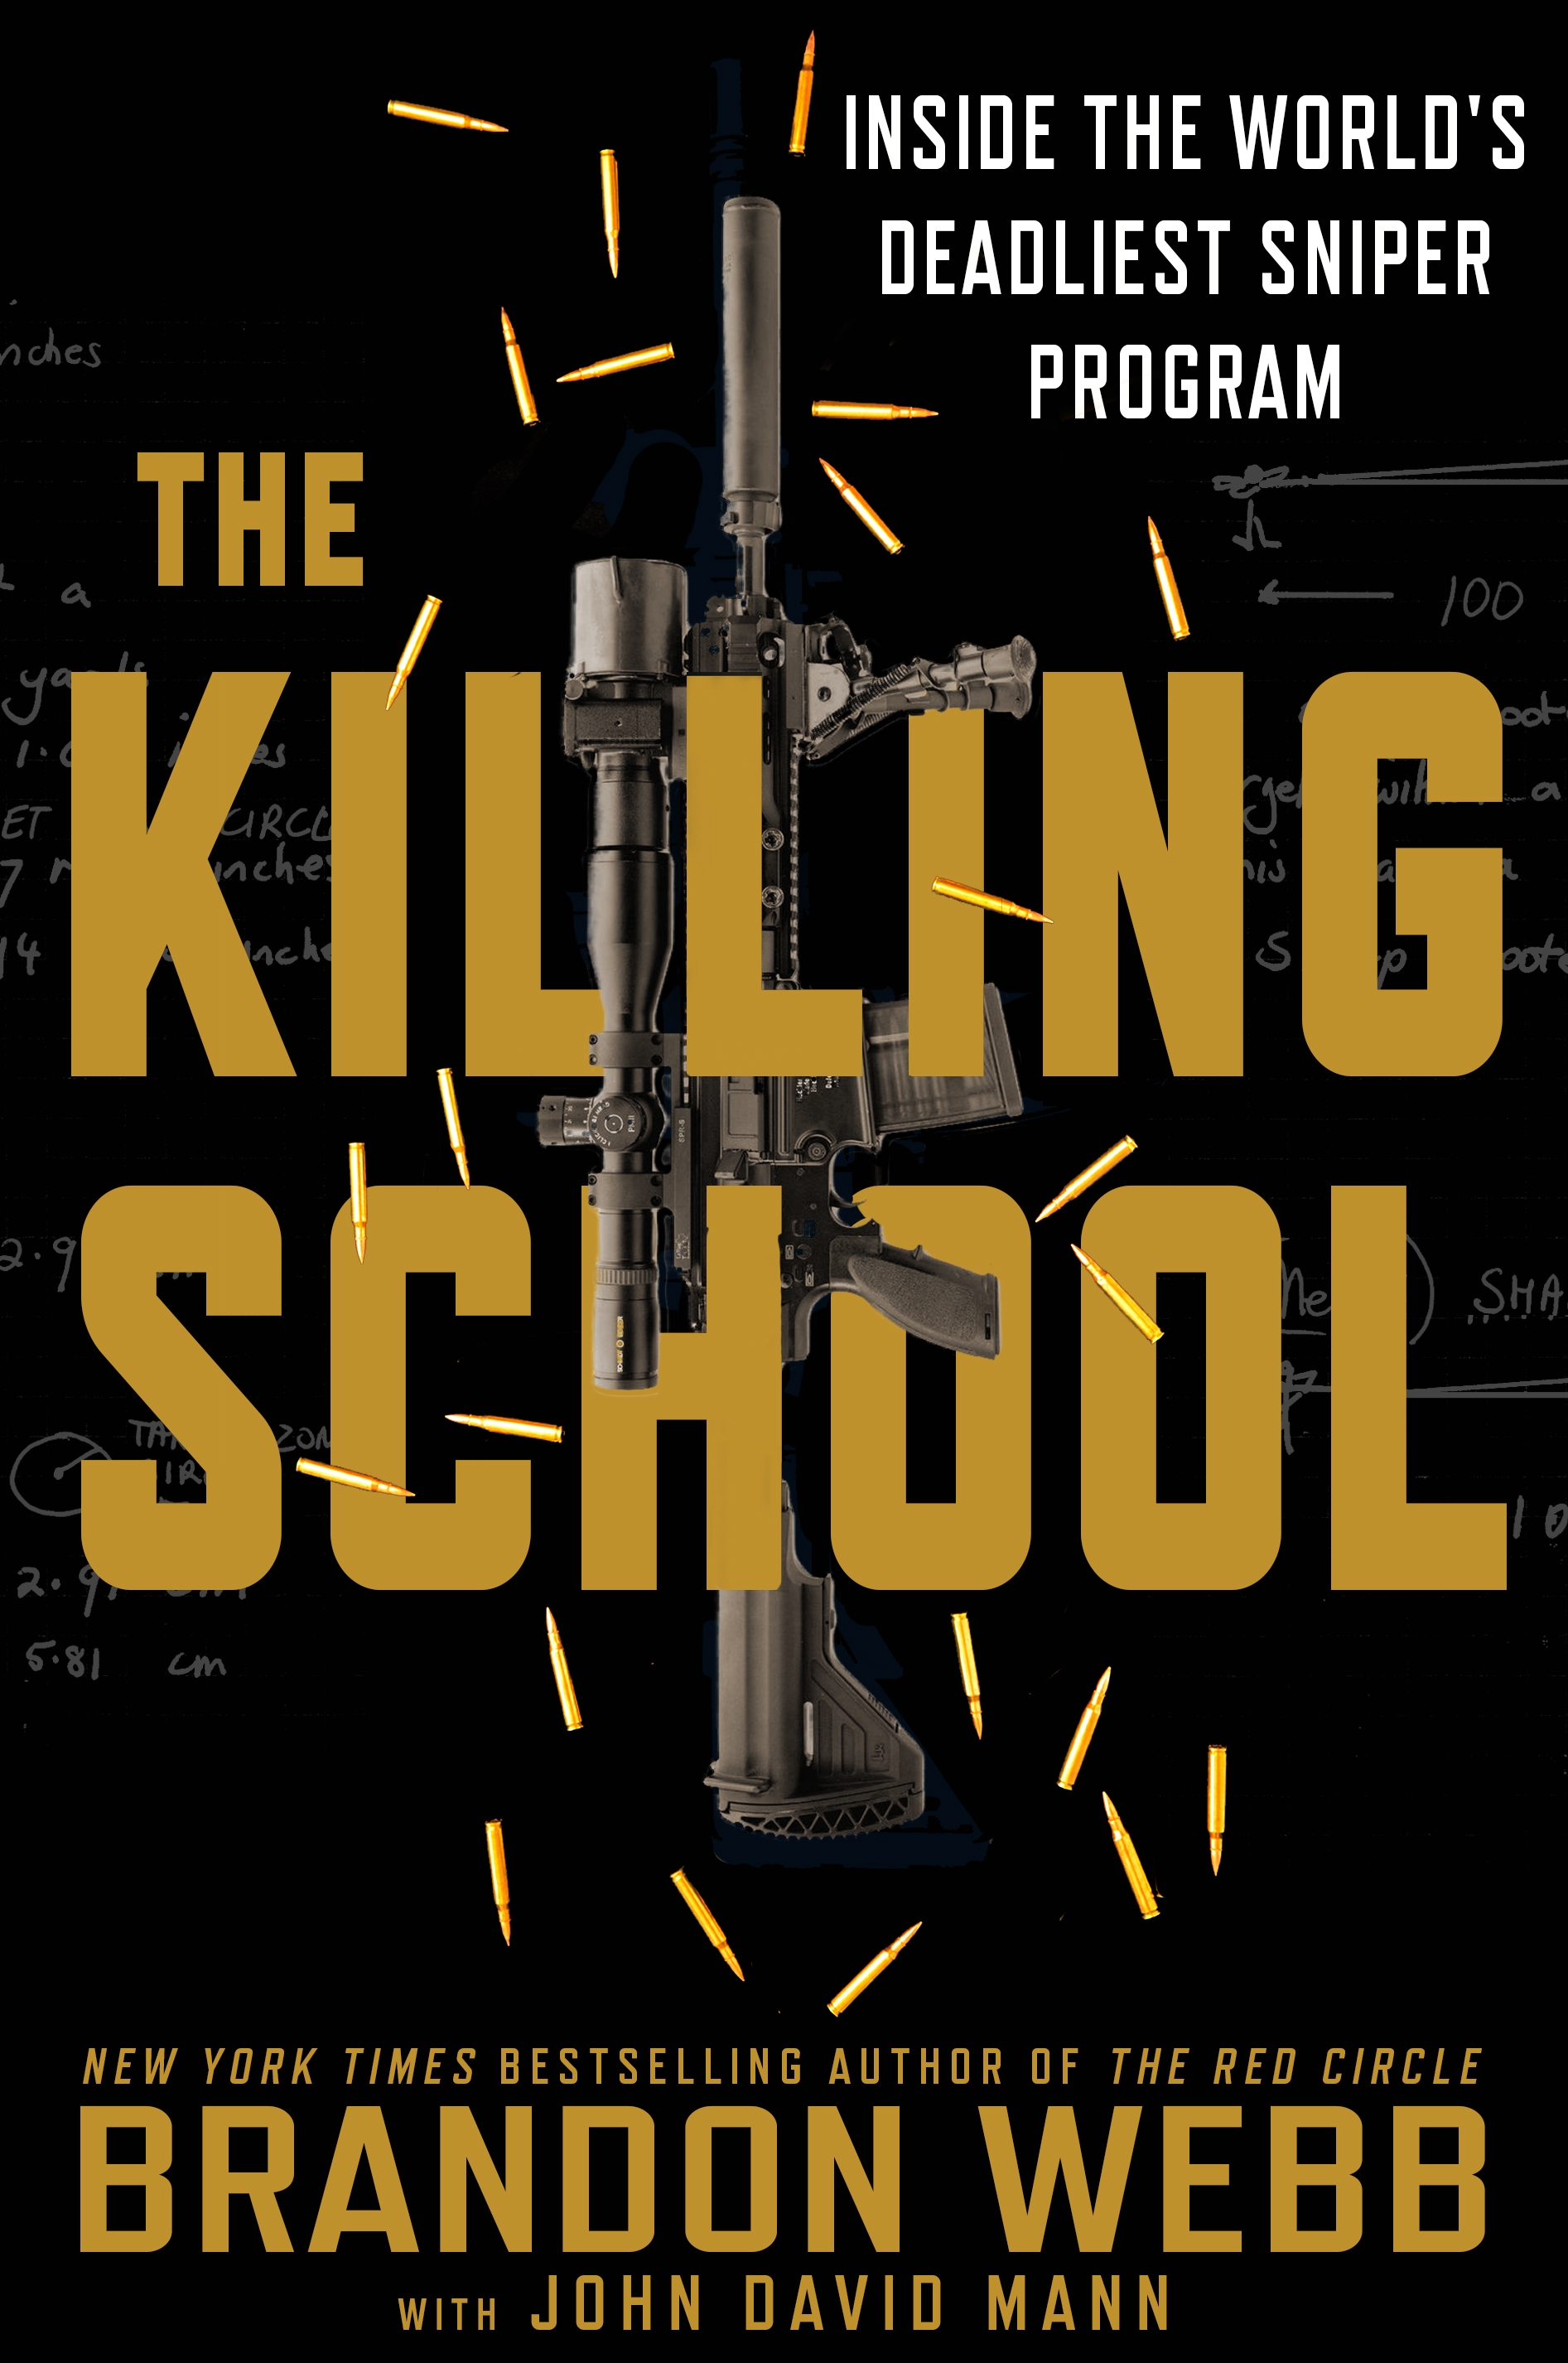 The Killing School